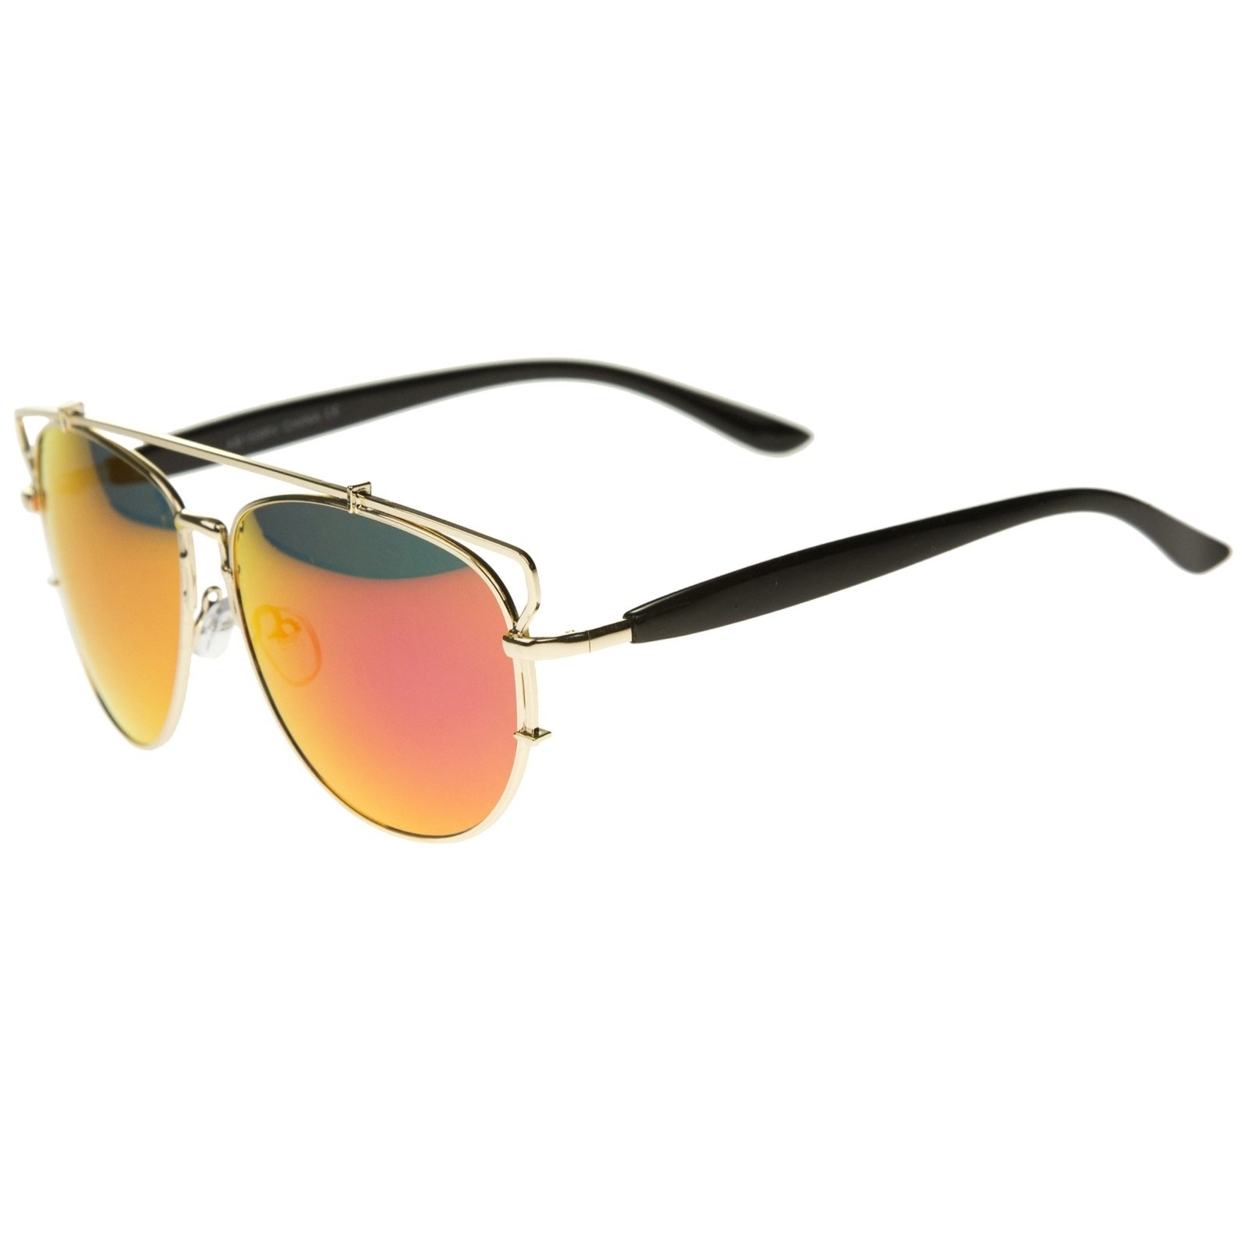 Modern Full Metal Crossbar Open Design Colored Mirror Aviator Sunglasses 58mm - Gold / Green Mirror